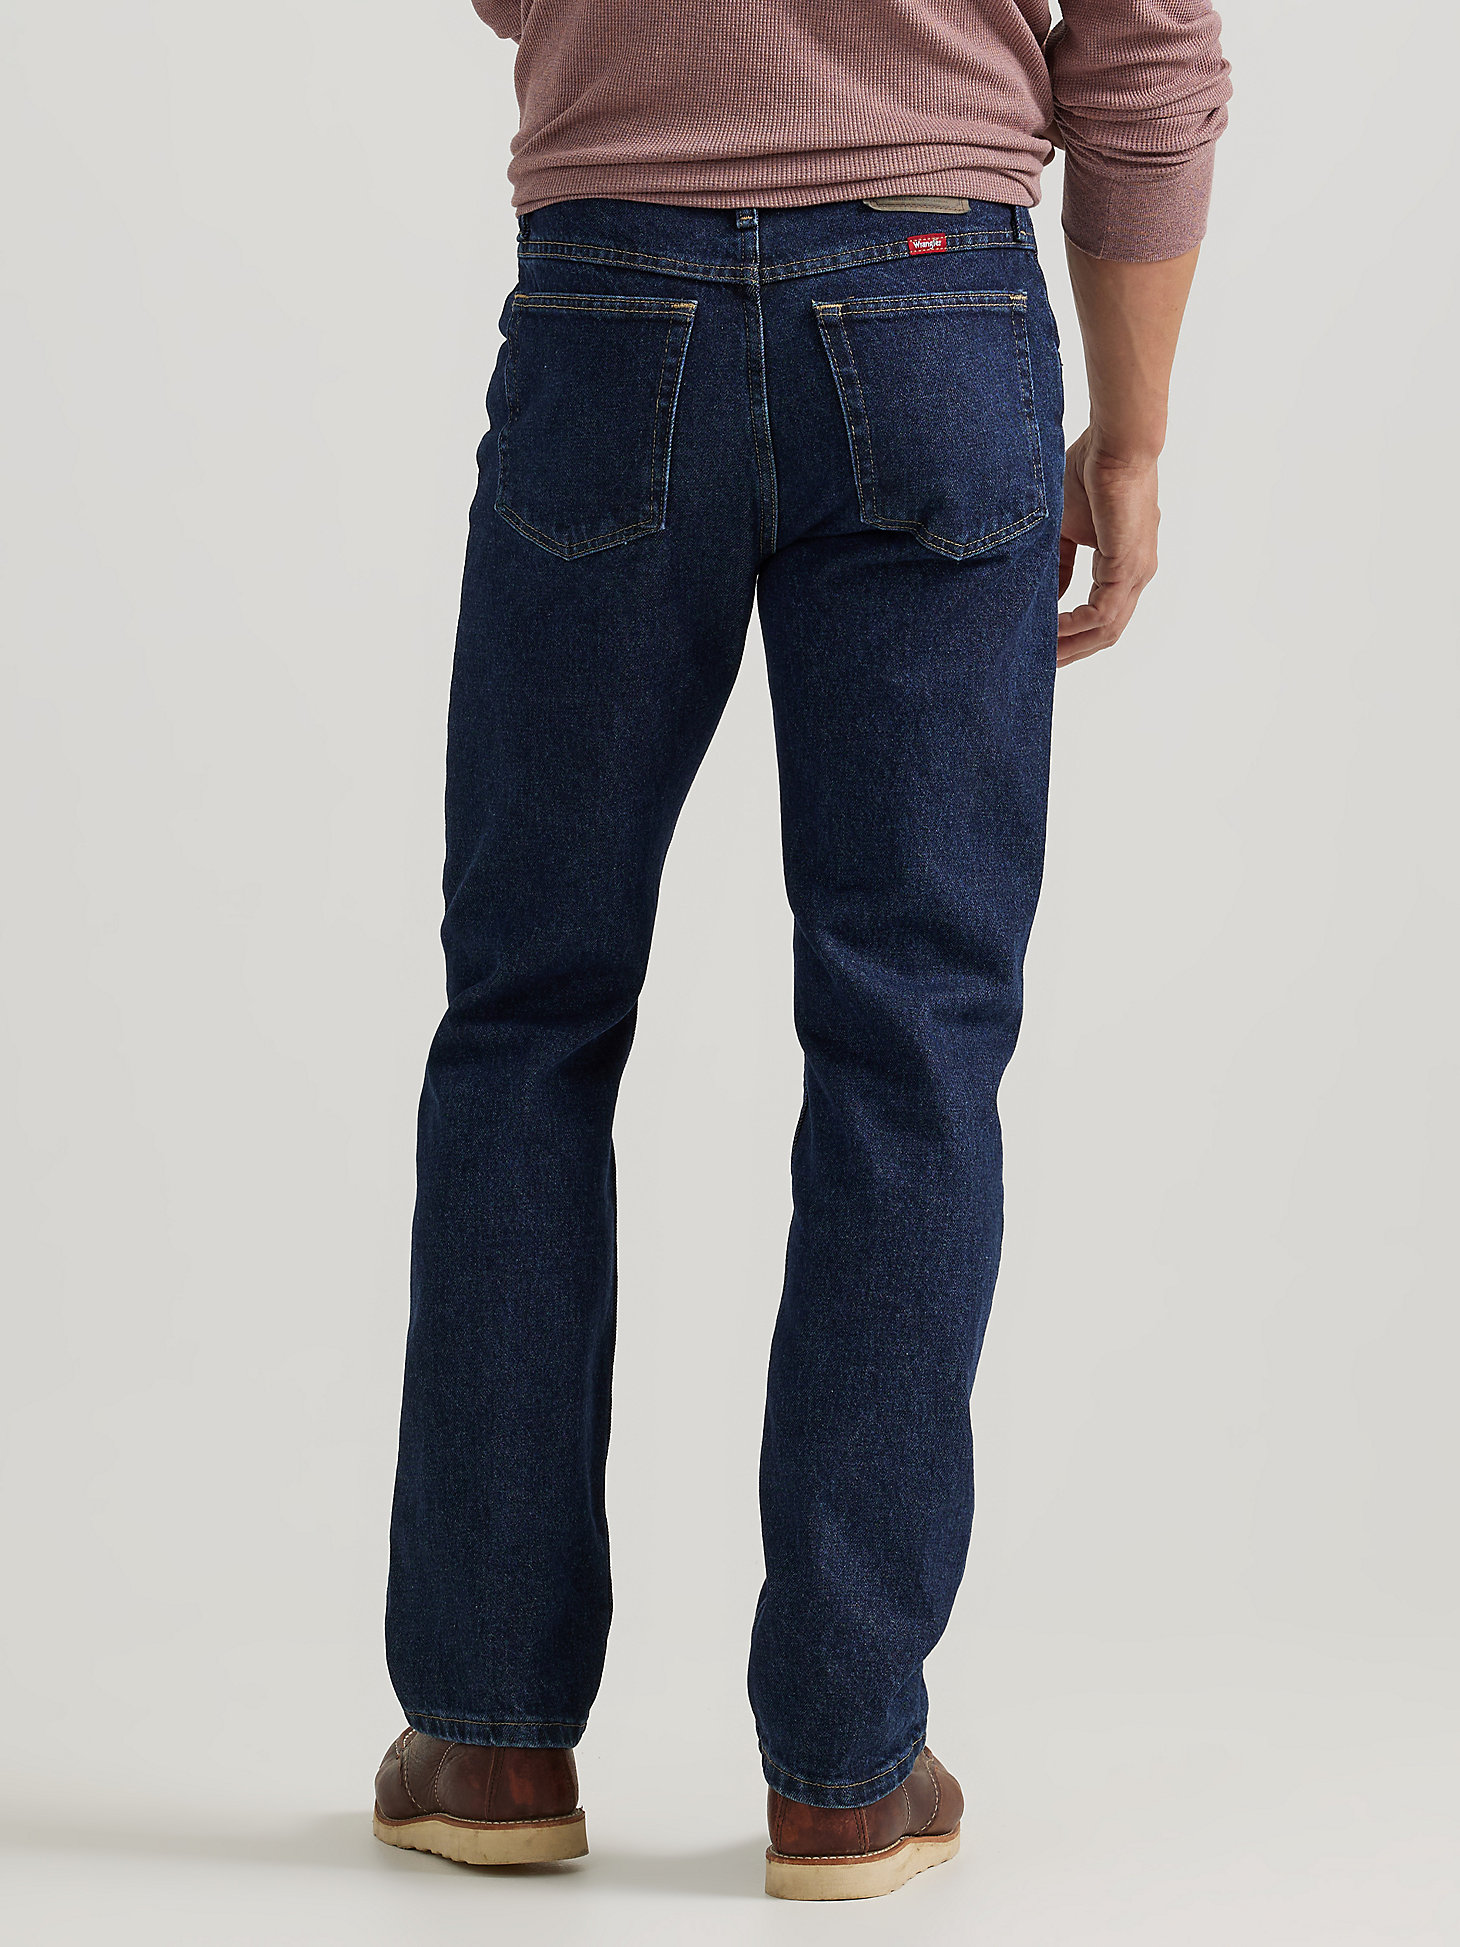 Wrangler® Five Star Premium Denim Regular Fit Jean in Midnight Rinse alternative view 1